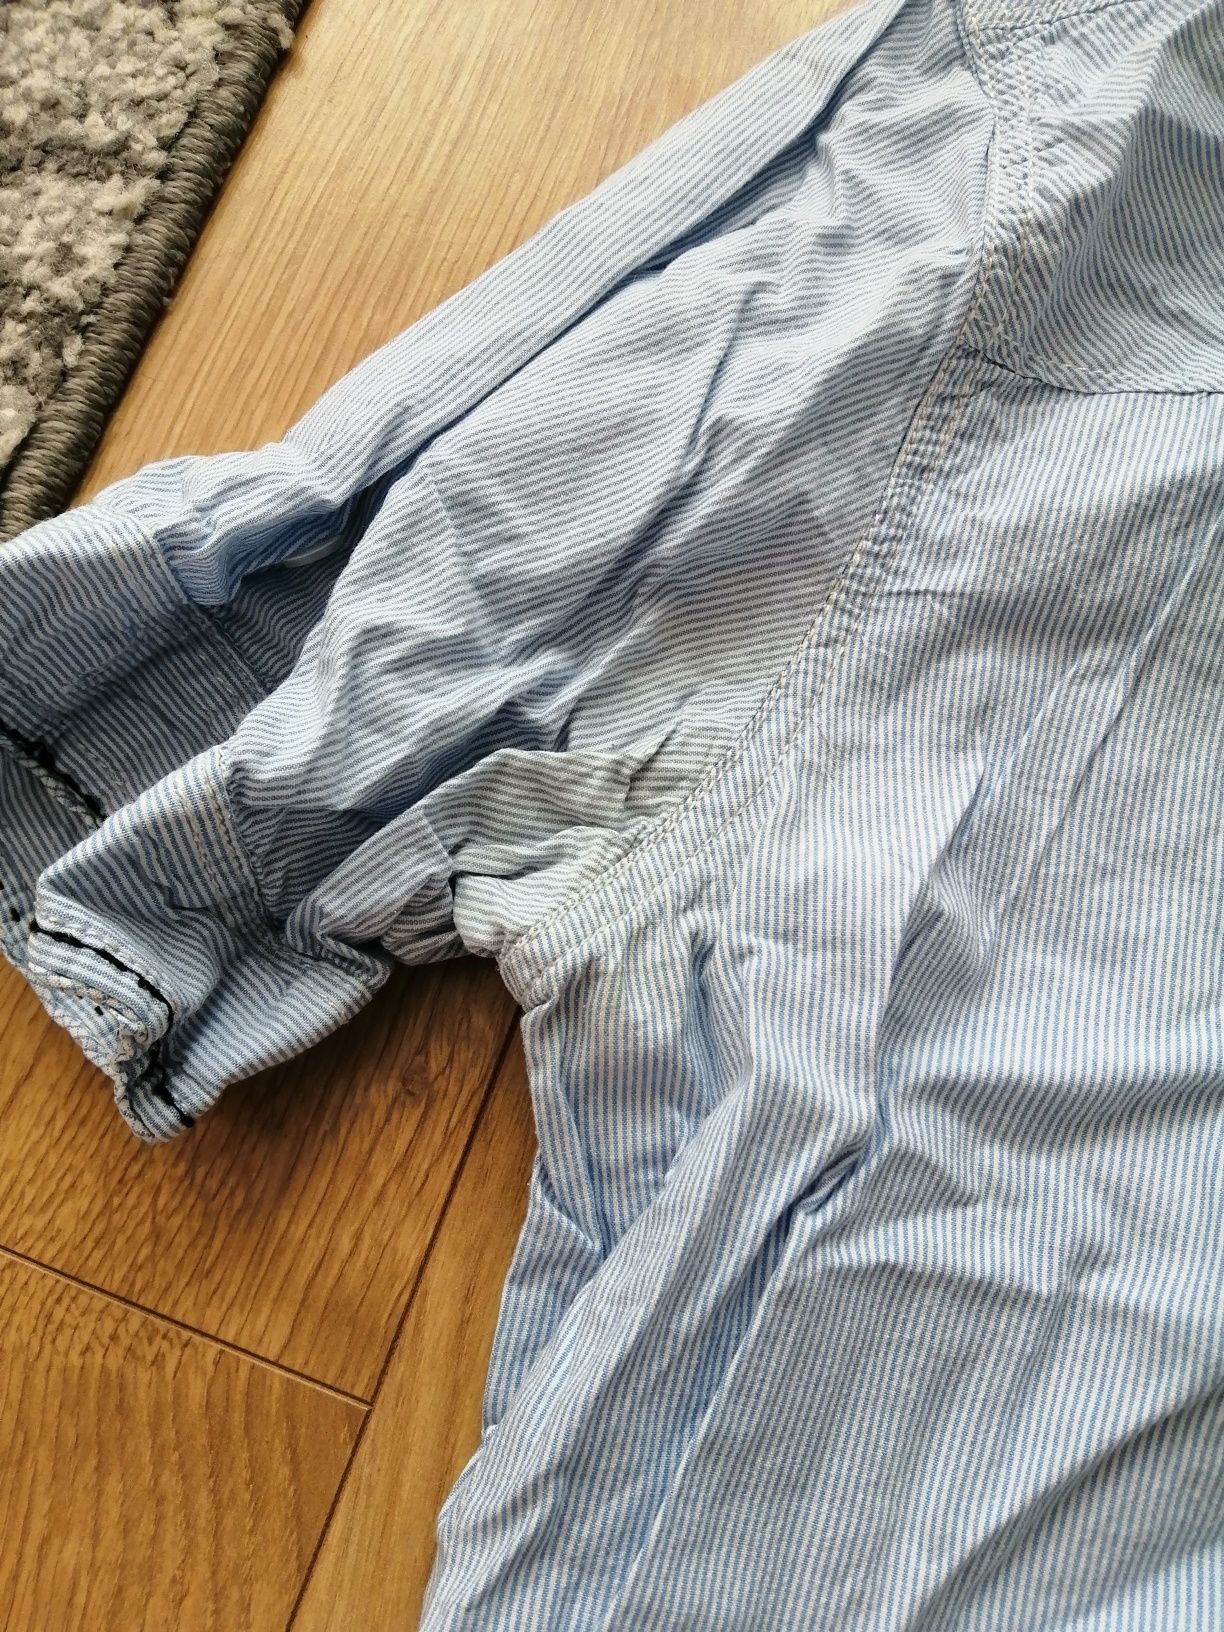 6. Koszula Pull&Bear niebieska męska XL jasna z krótkim rękawem